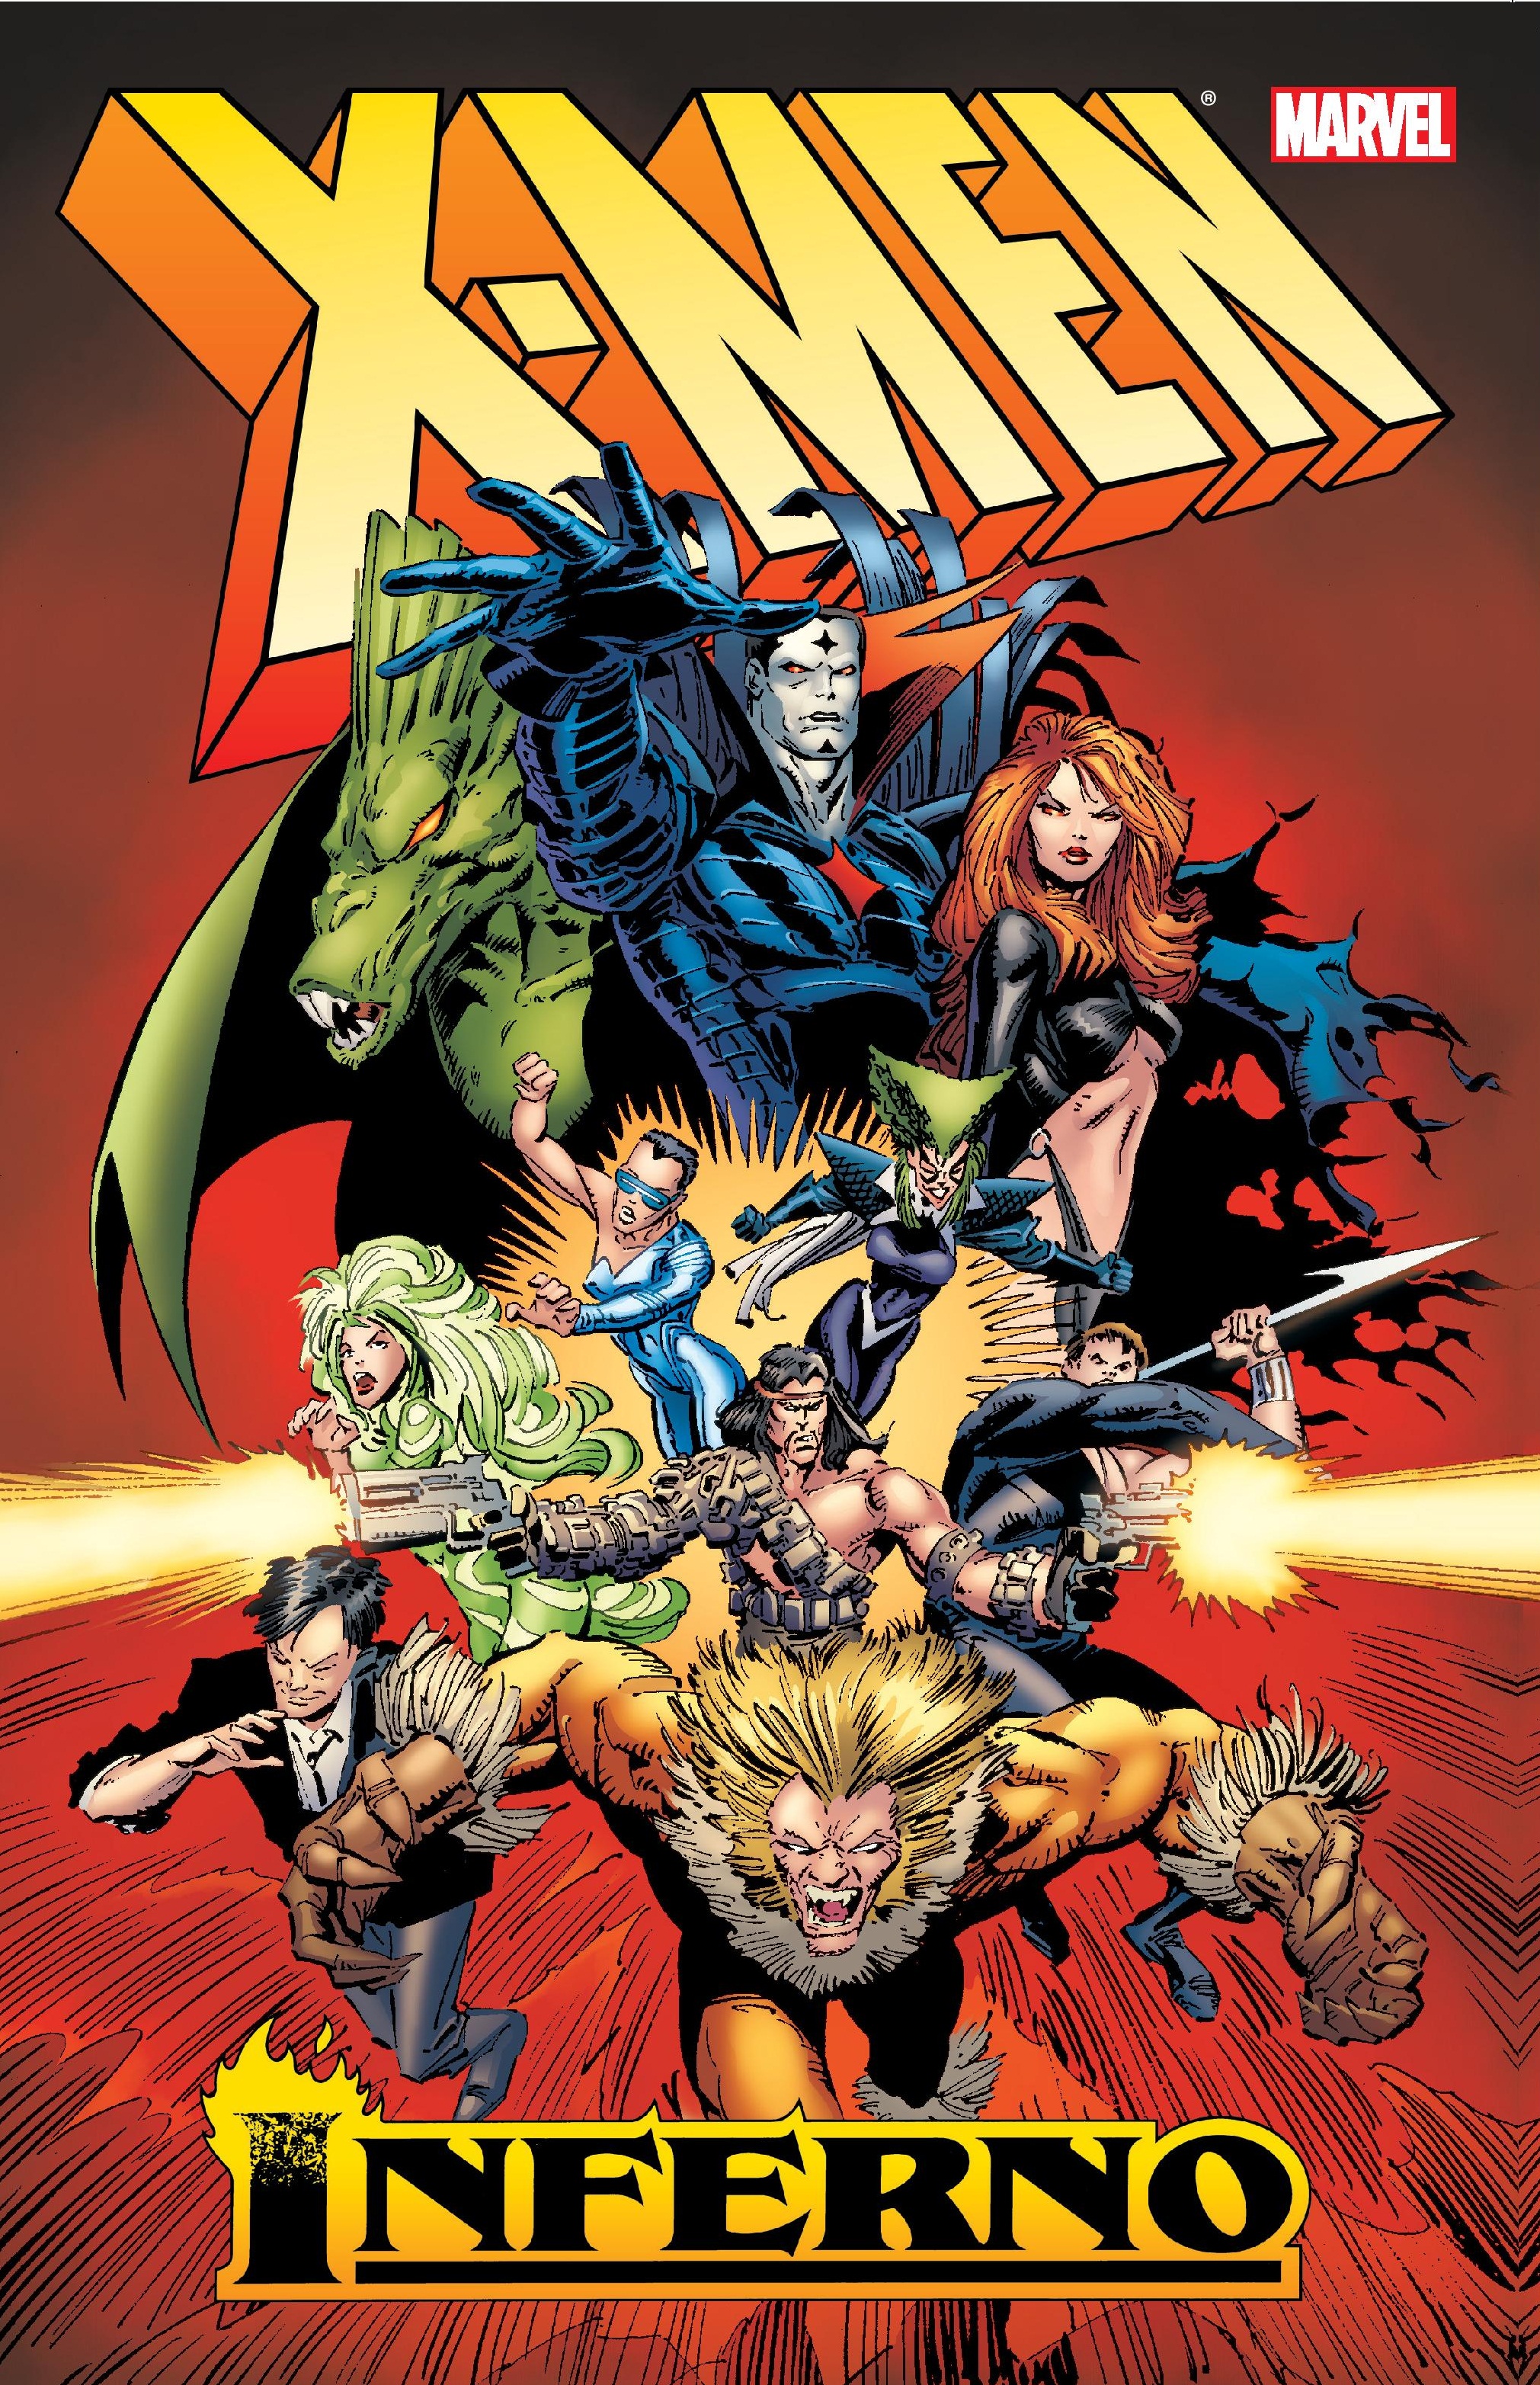 X-Men: Inferno Vol. 1 (Trade Paperback)